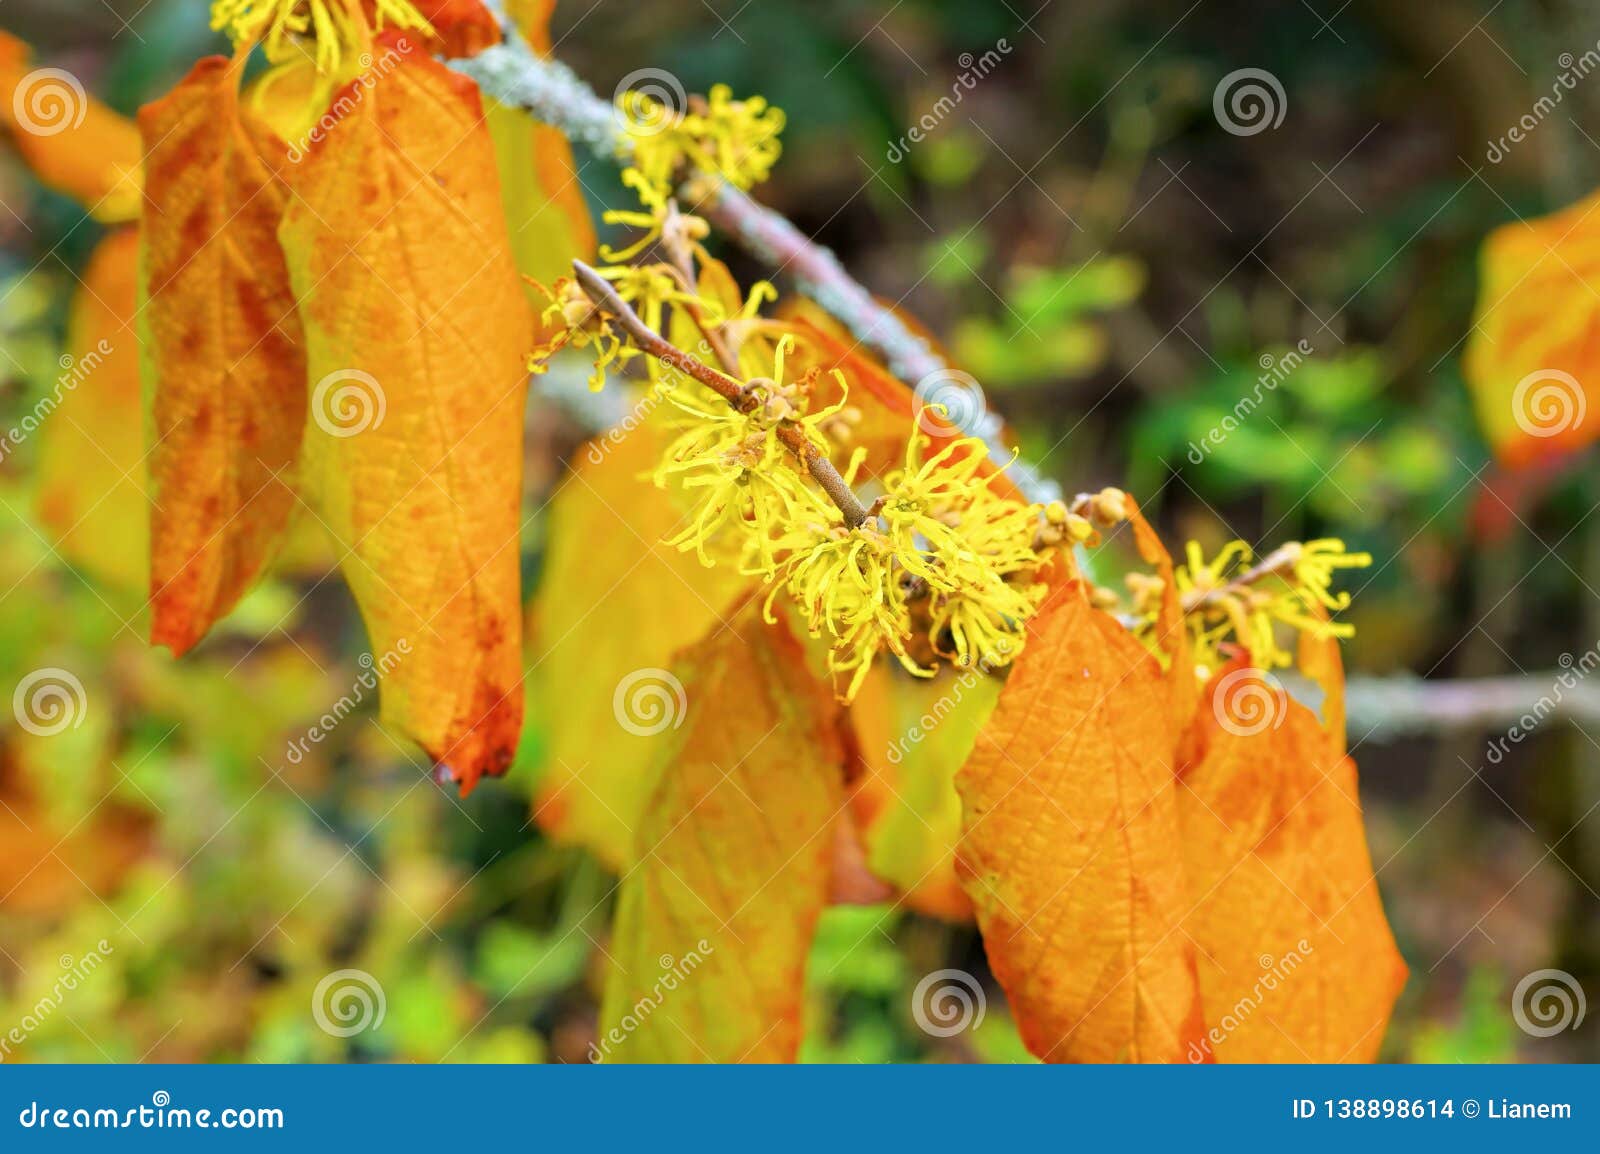 hamamelis virginiana is blooming in fall